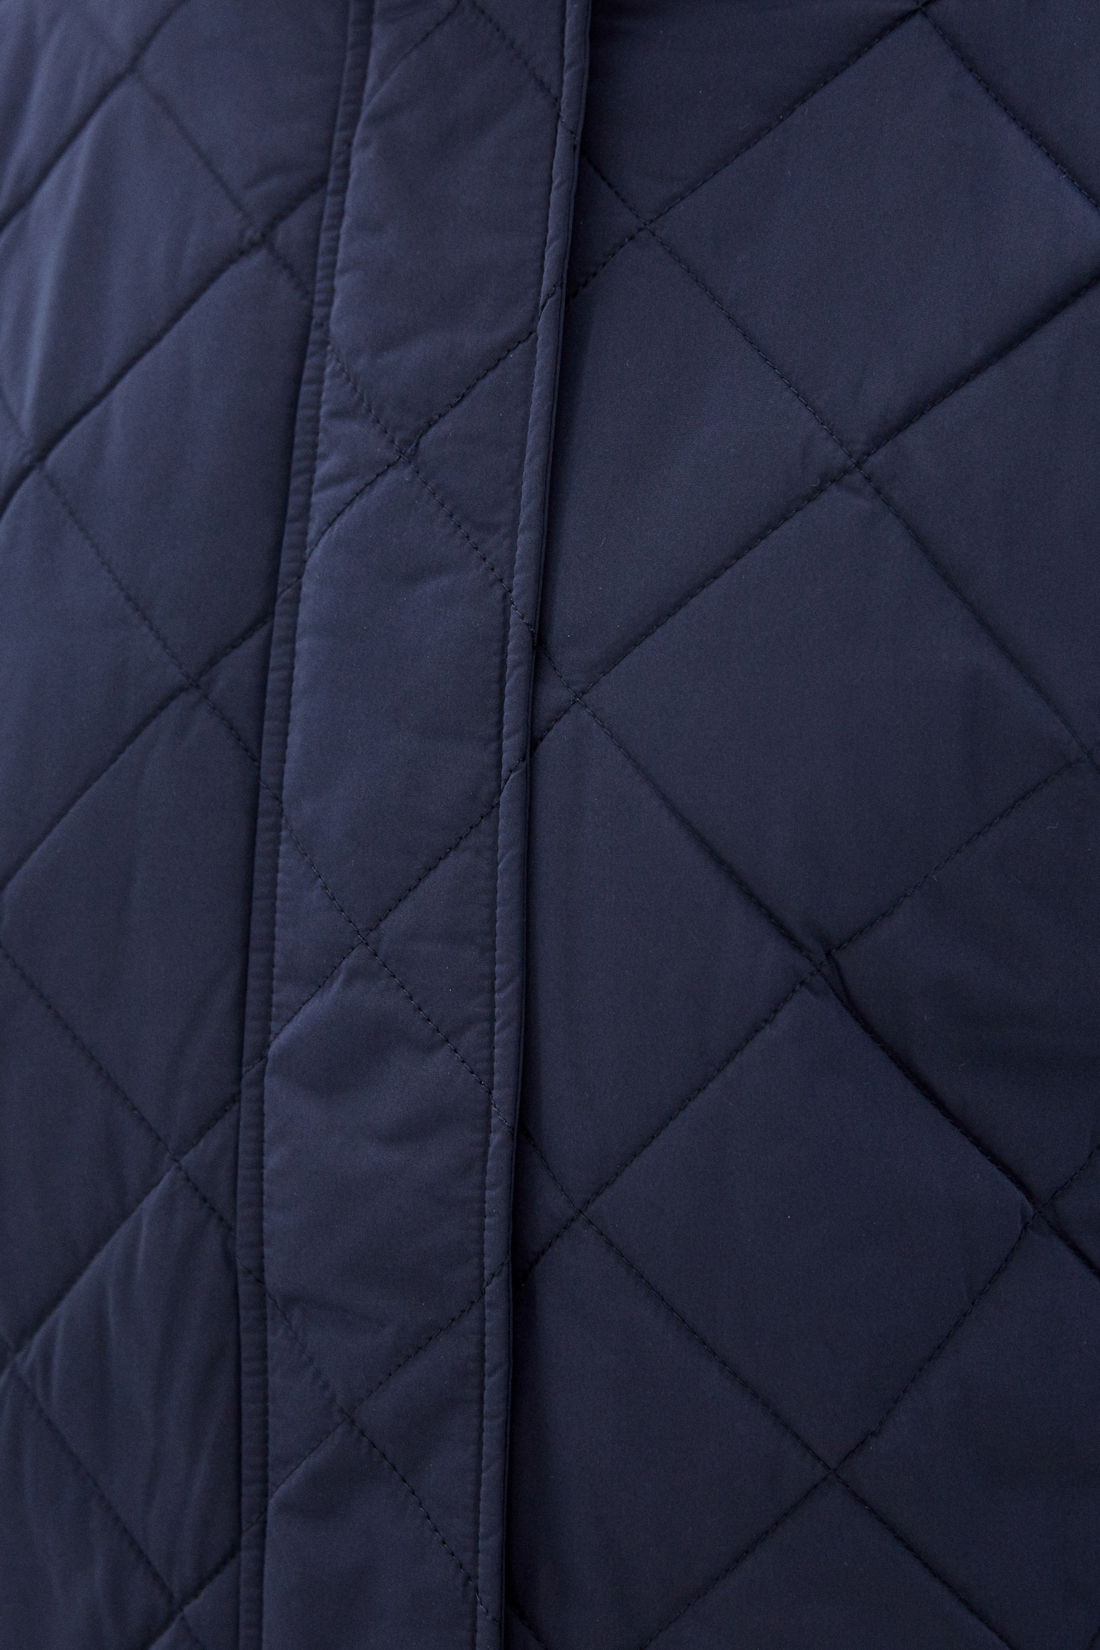 Стёганая куртка-оверсайз (арт. baon B030052), размер M, цвет синий Стёганая куртка-оверсайз (арт. baon B030052) - фото 3